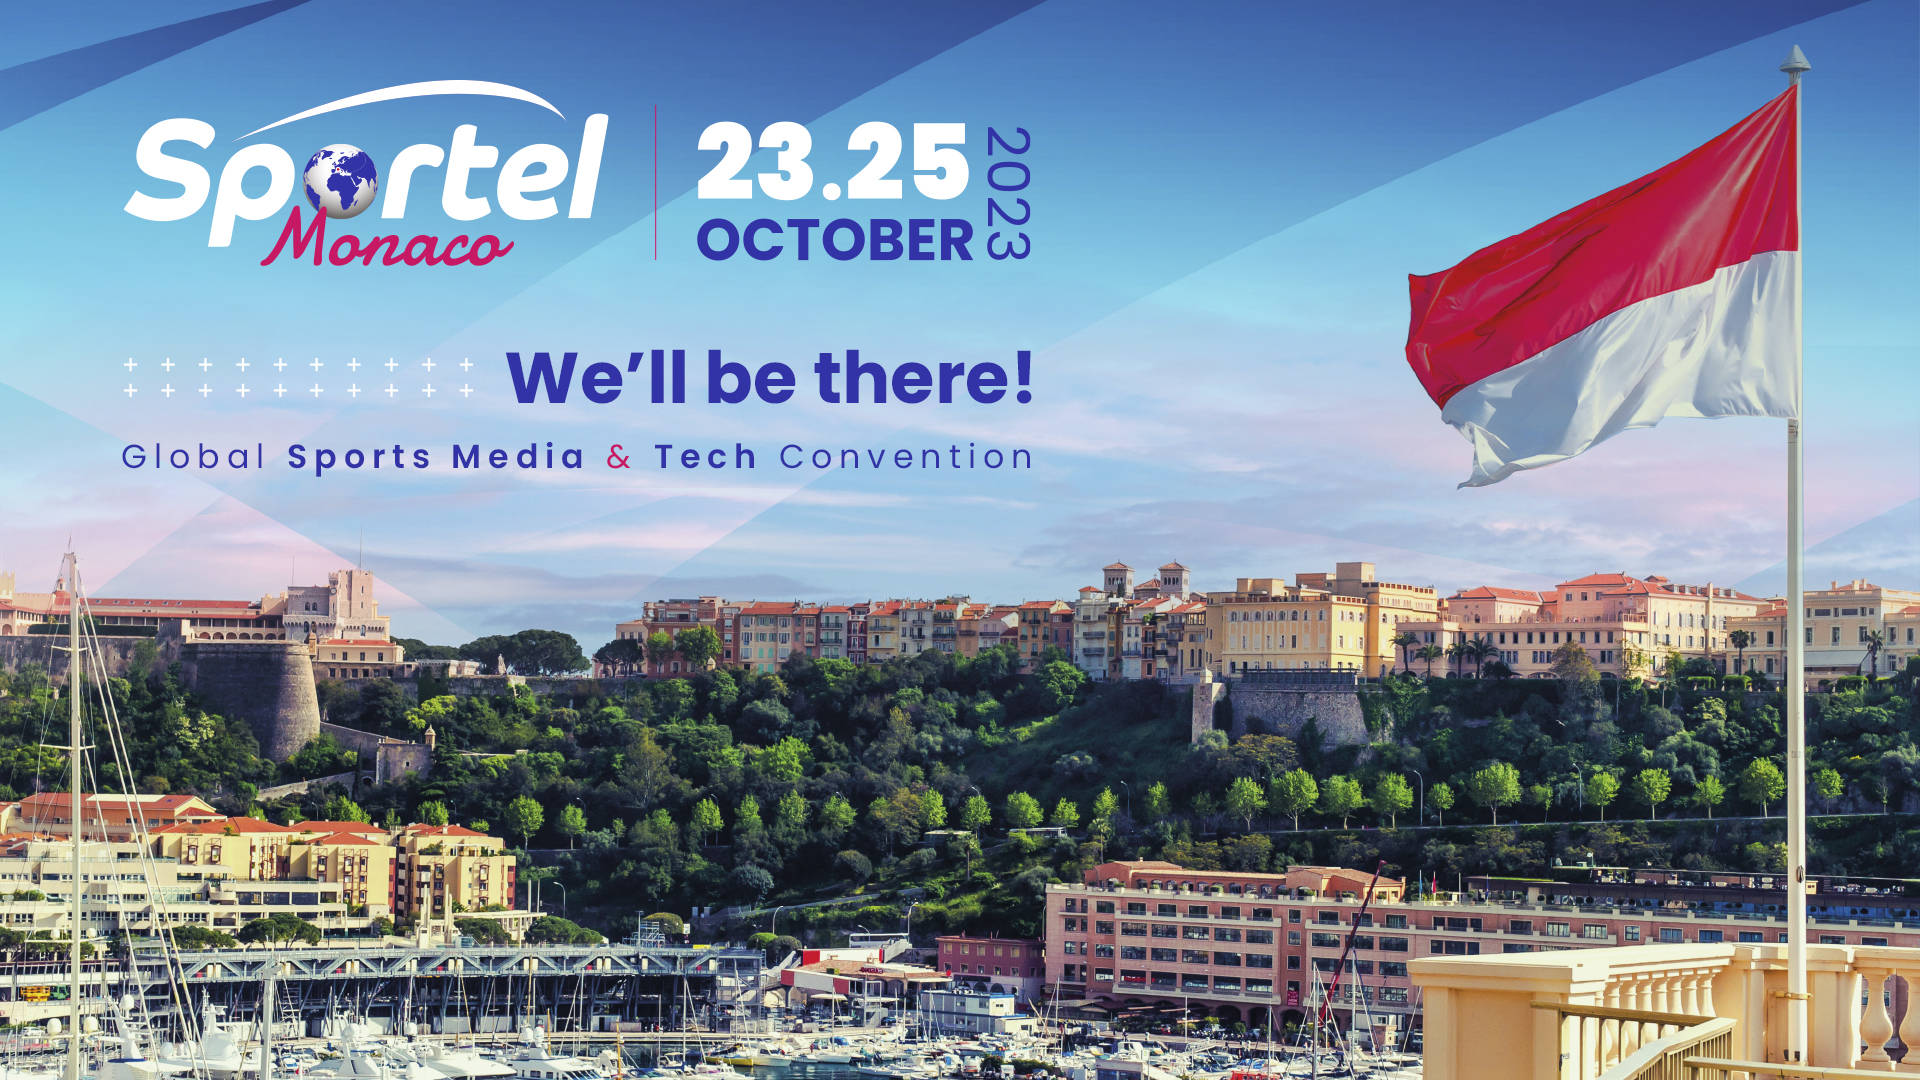 SPORTEL Monaco - We'll be there